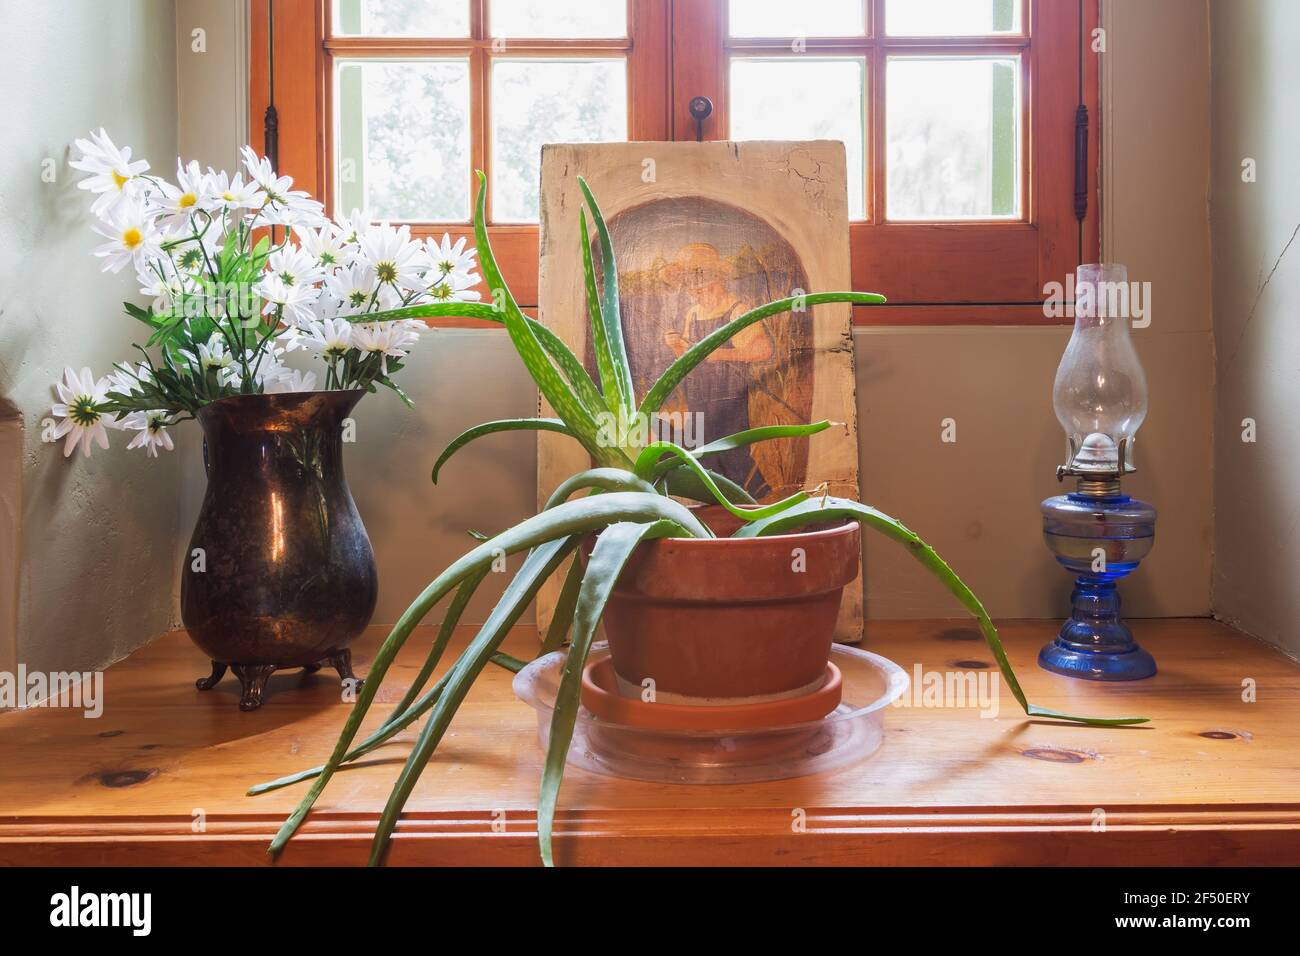 White flowers in vintage vase, succulent plant in terracotta planter, framed painting of boy fishing, old blue oil lamp on windowsill inside old house Stock Photo